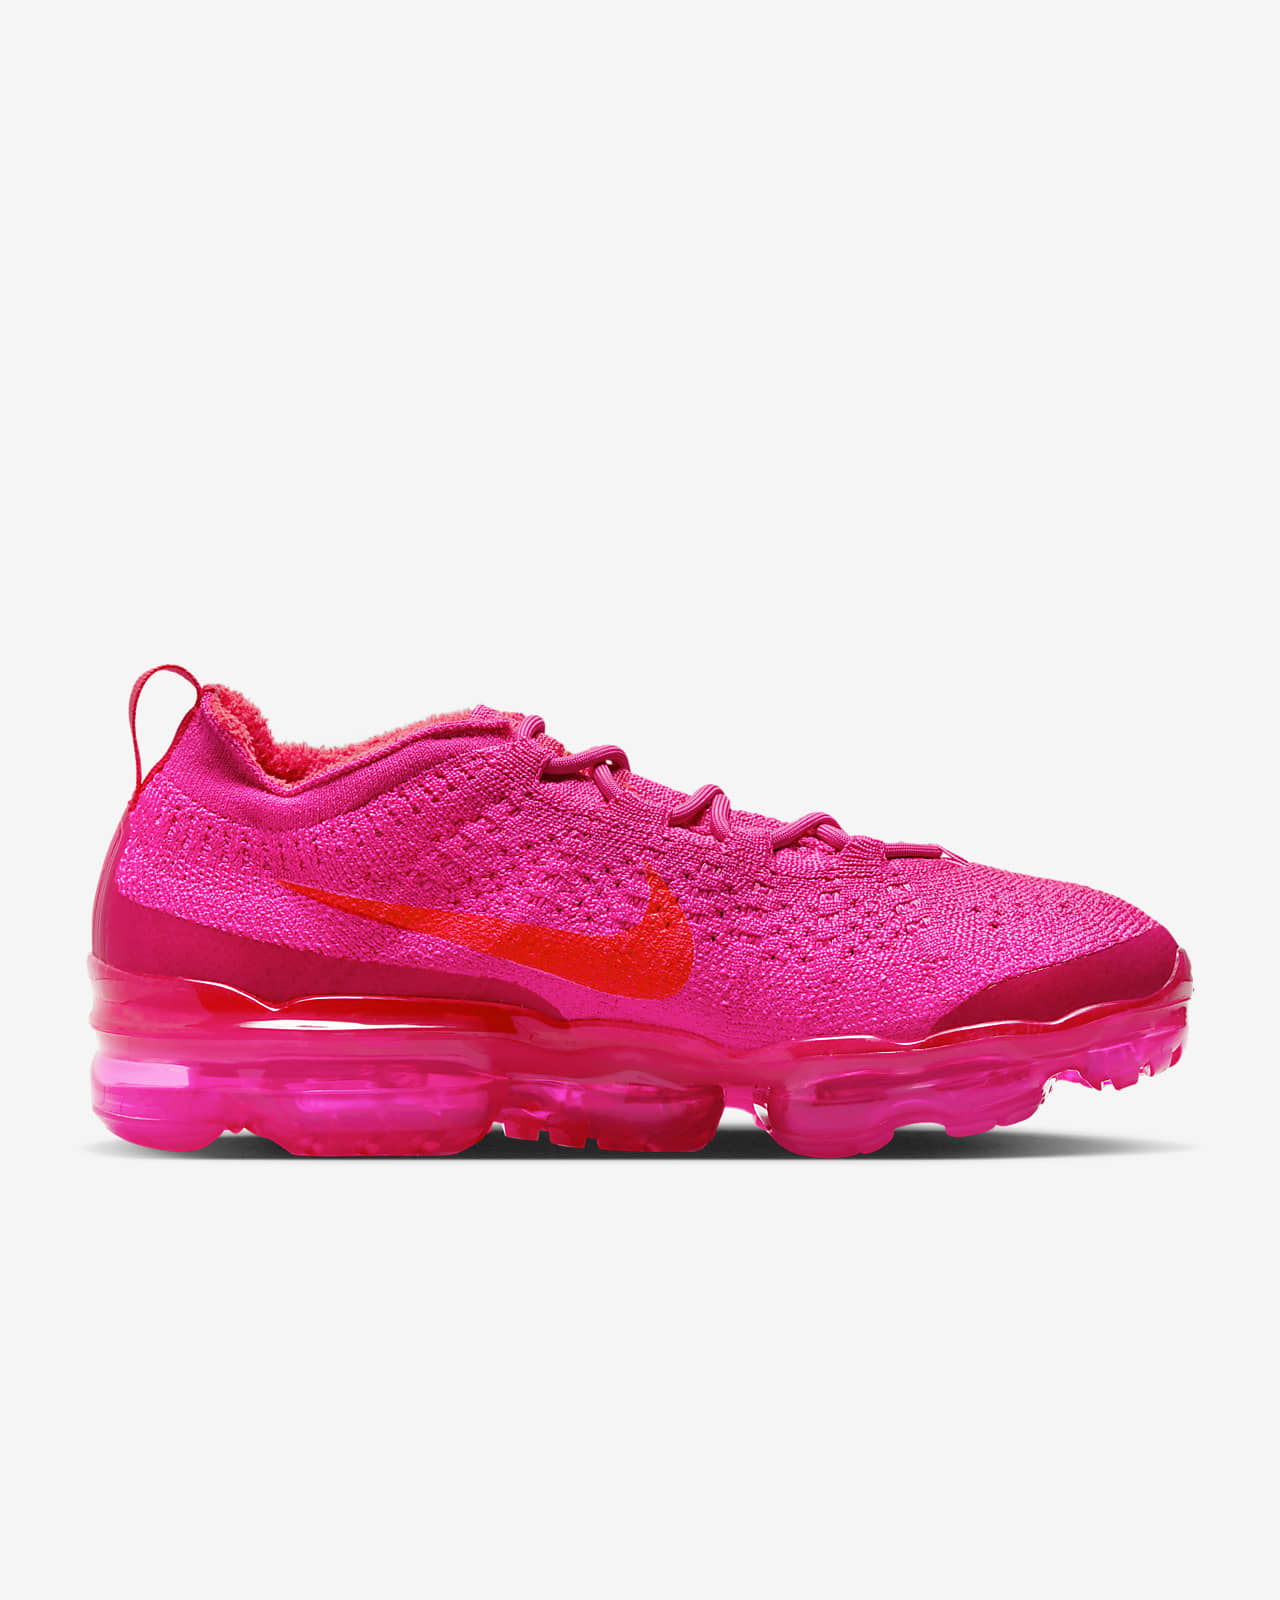 Nike Air VaporMax Plus Fireberry (Women's)